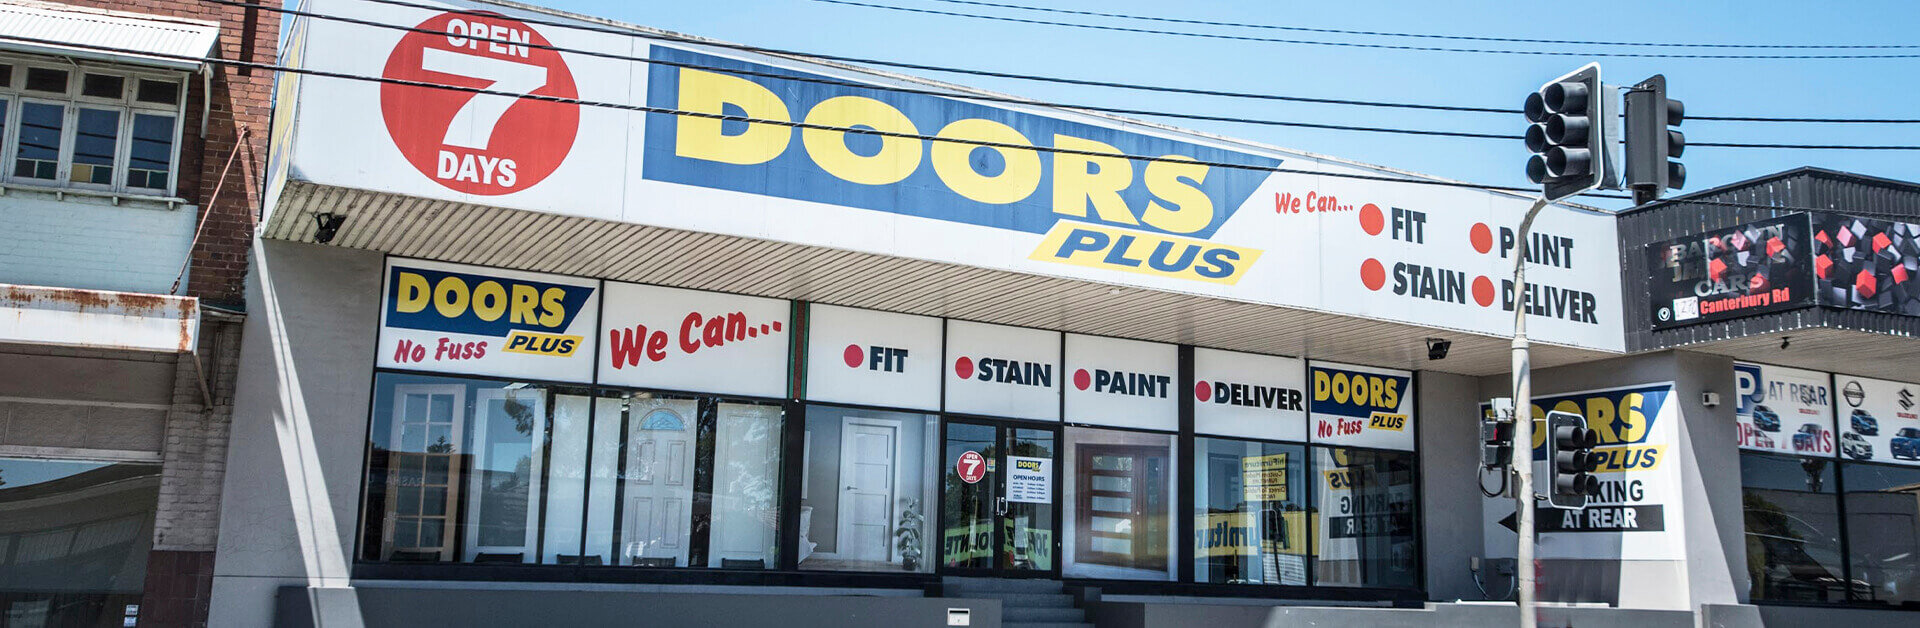 Doors Plus Punchbowl Showroom in Sydney, New South Wales